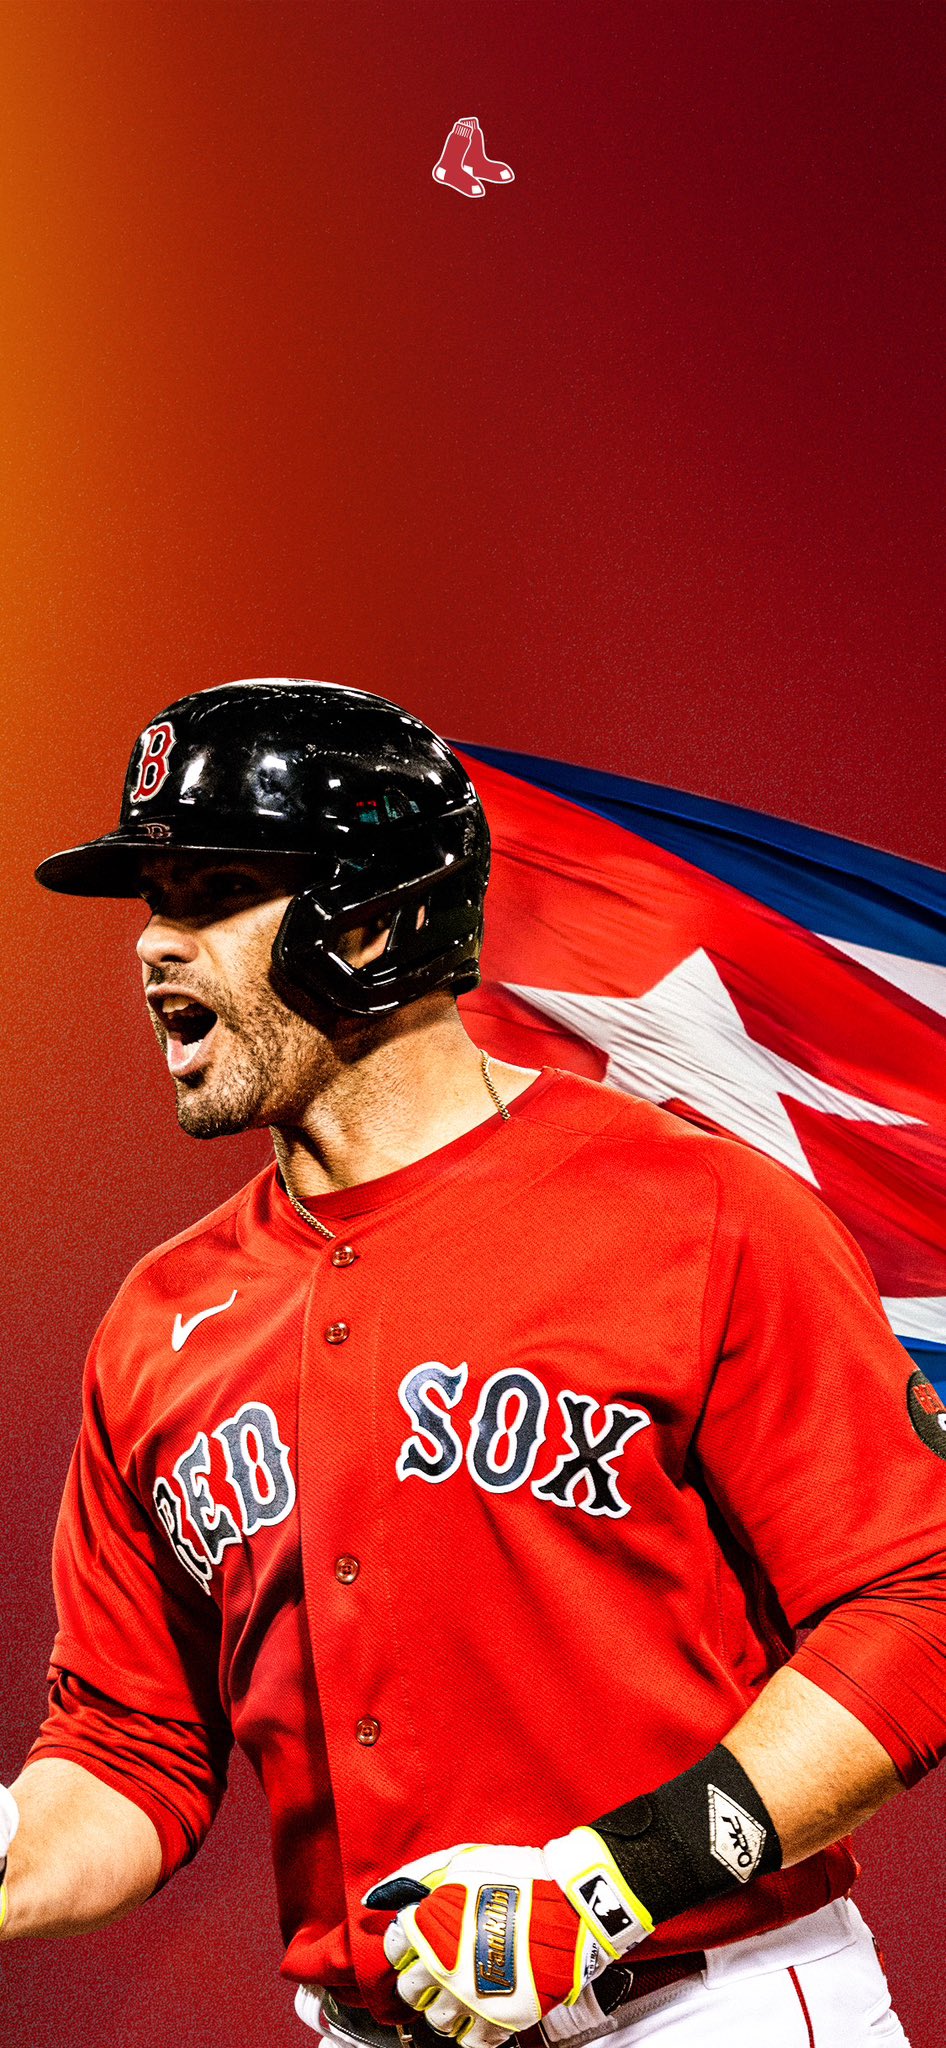 Red Sox on X: ¡Vamos #MediasRojas! #WallpaperWednesday